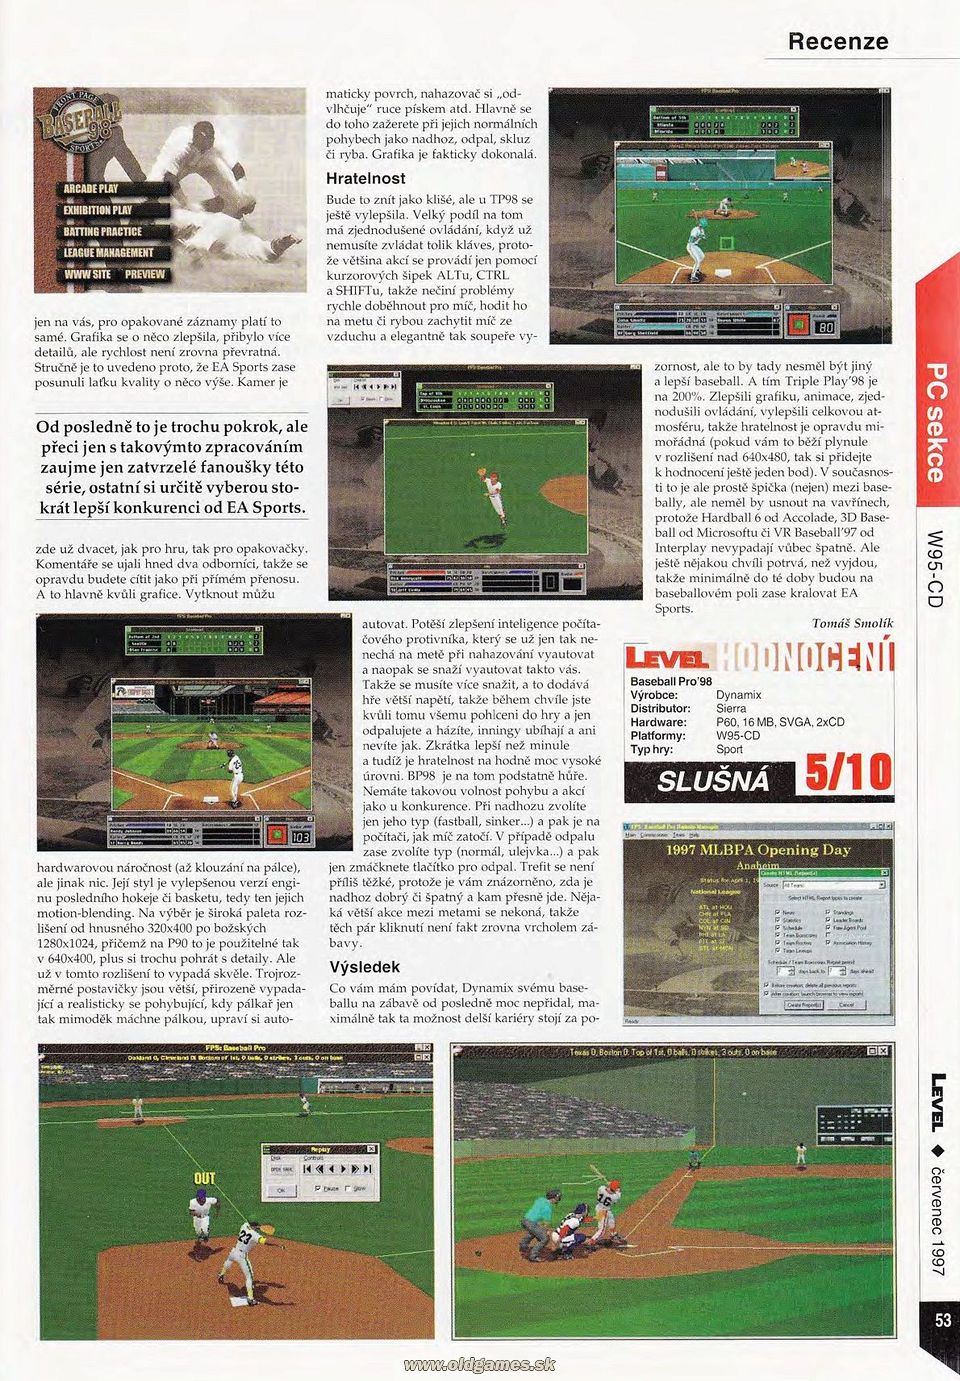 Tripple Play 98 vs. FPS: Baseball Pro 98